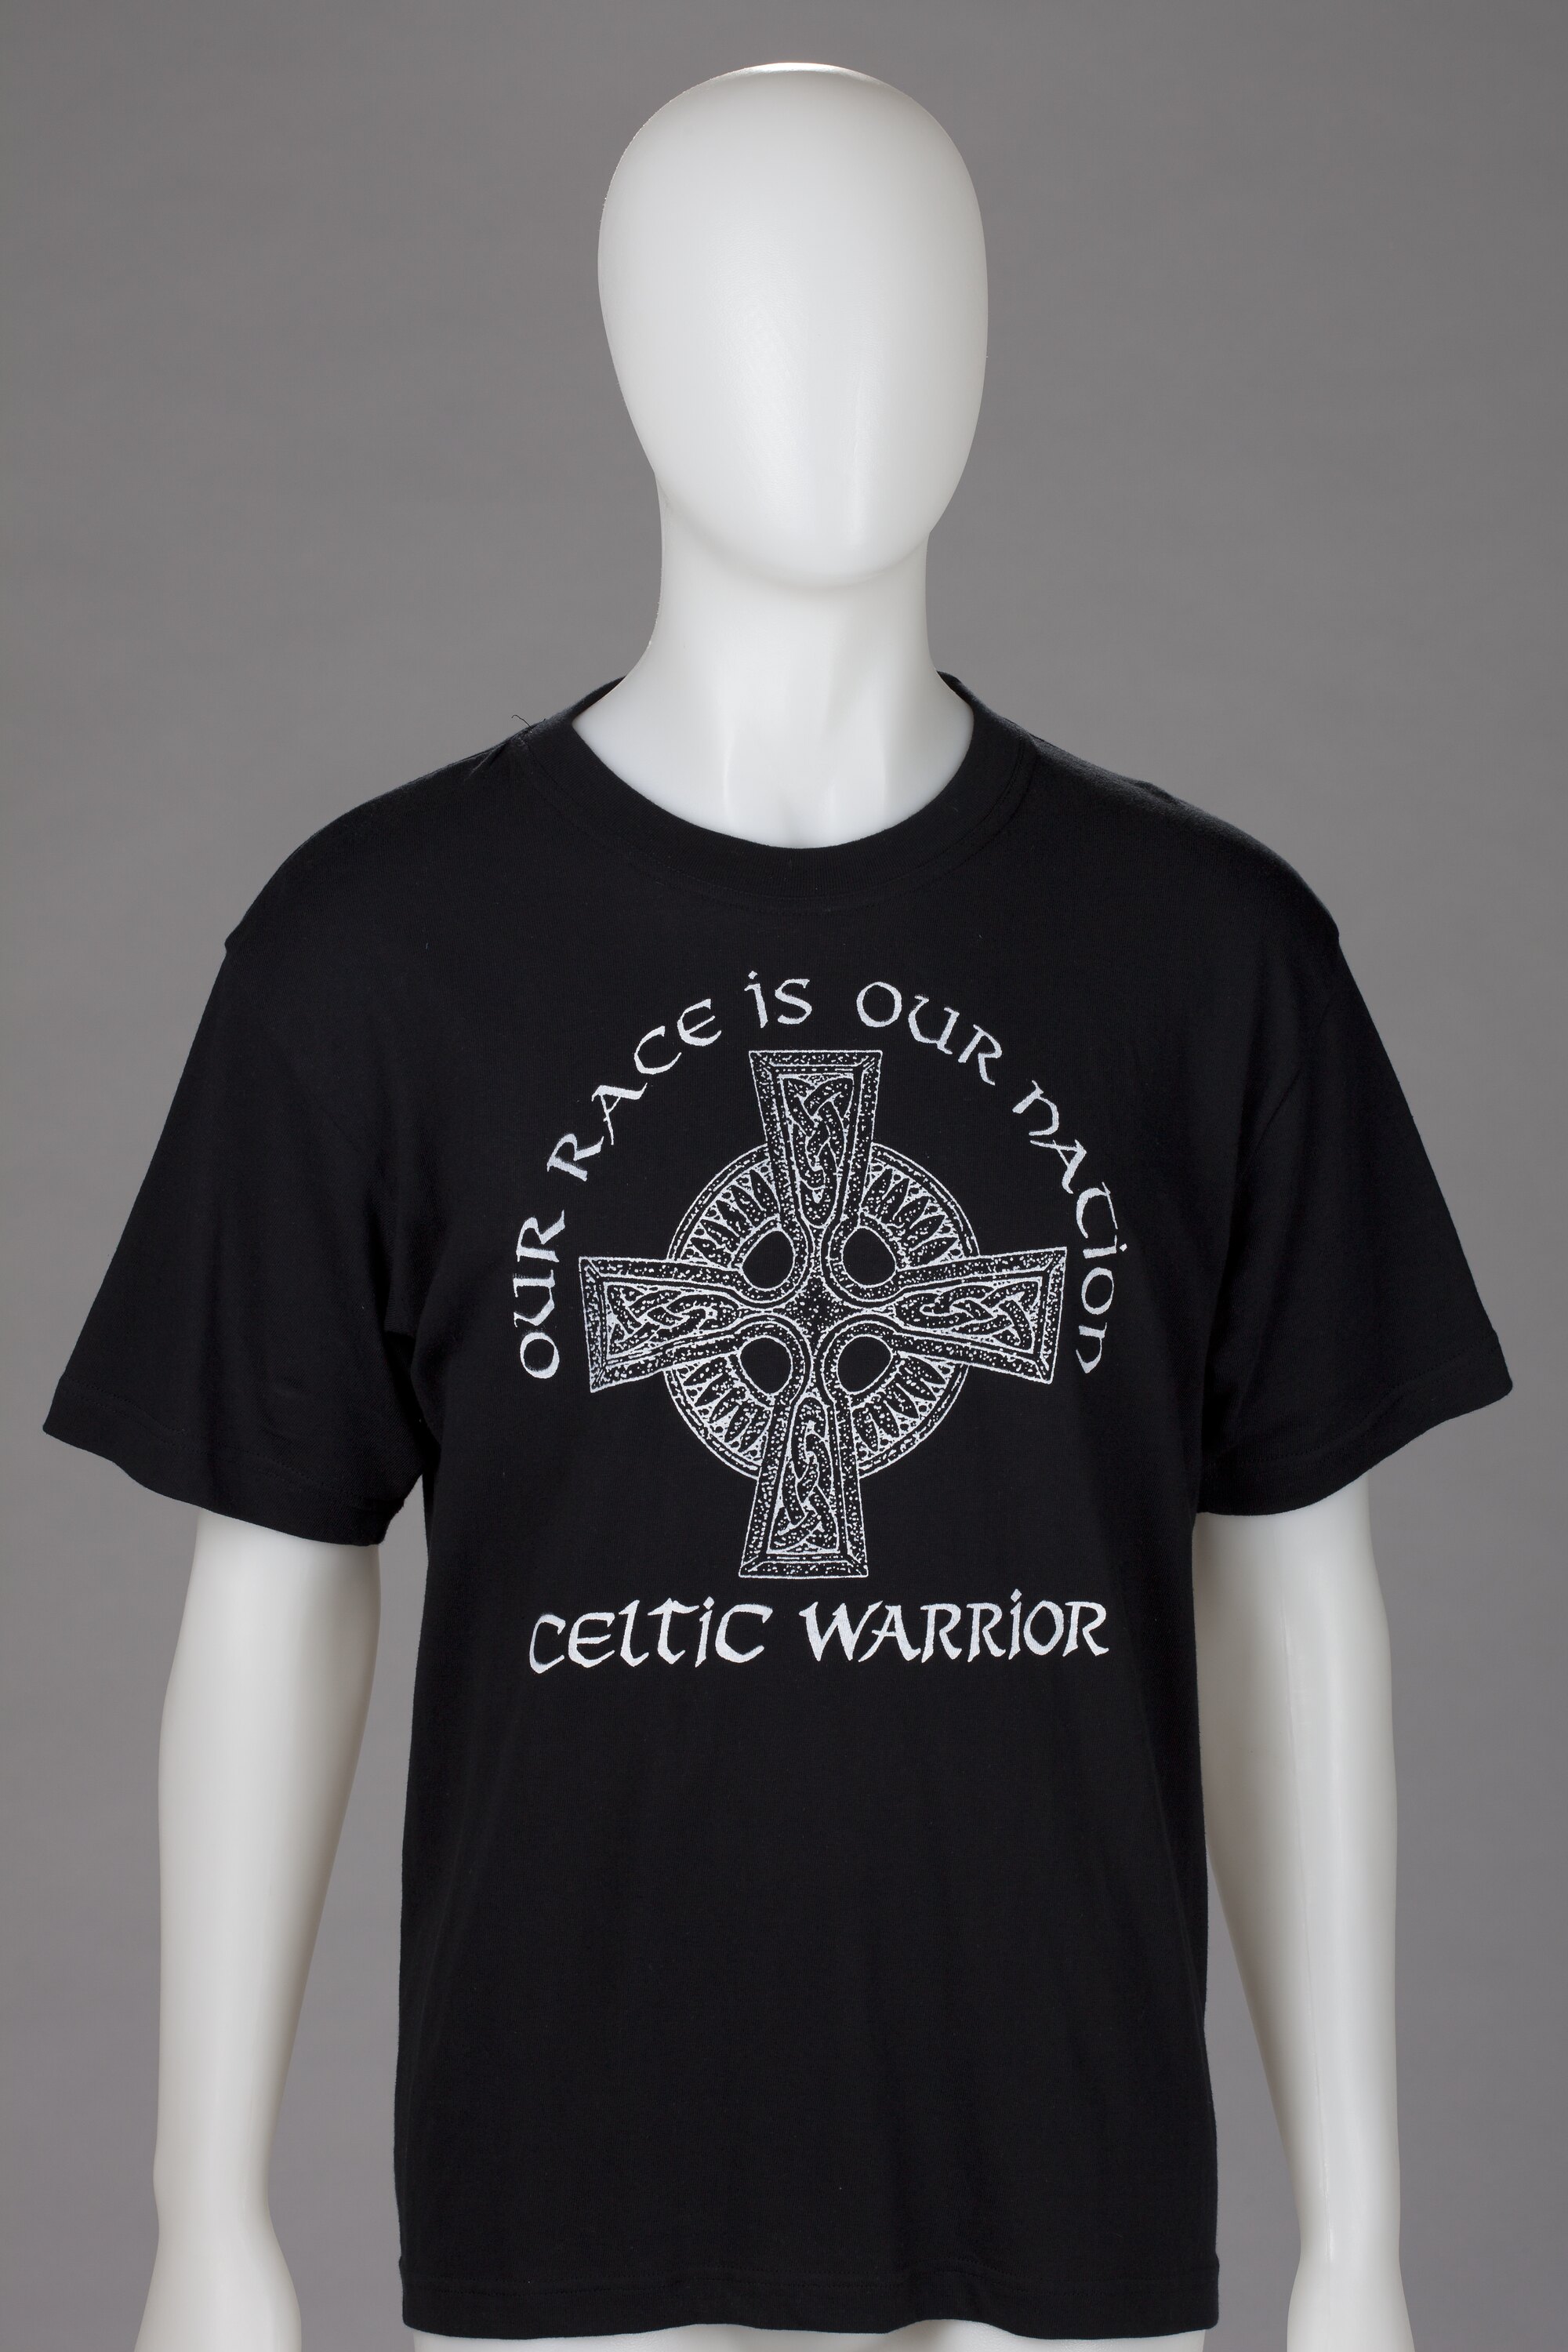 Organisation: Celtic Warriors